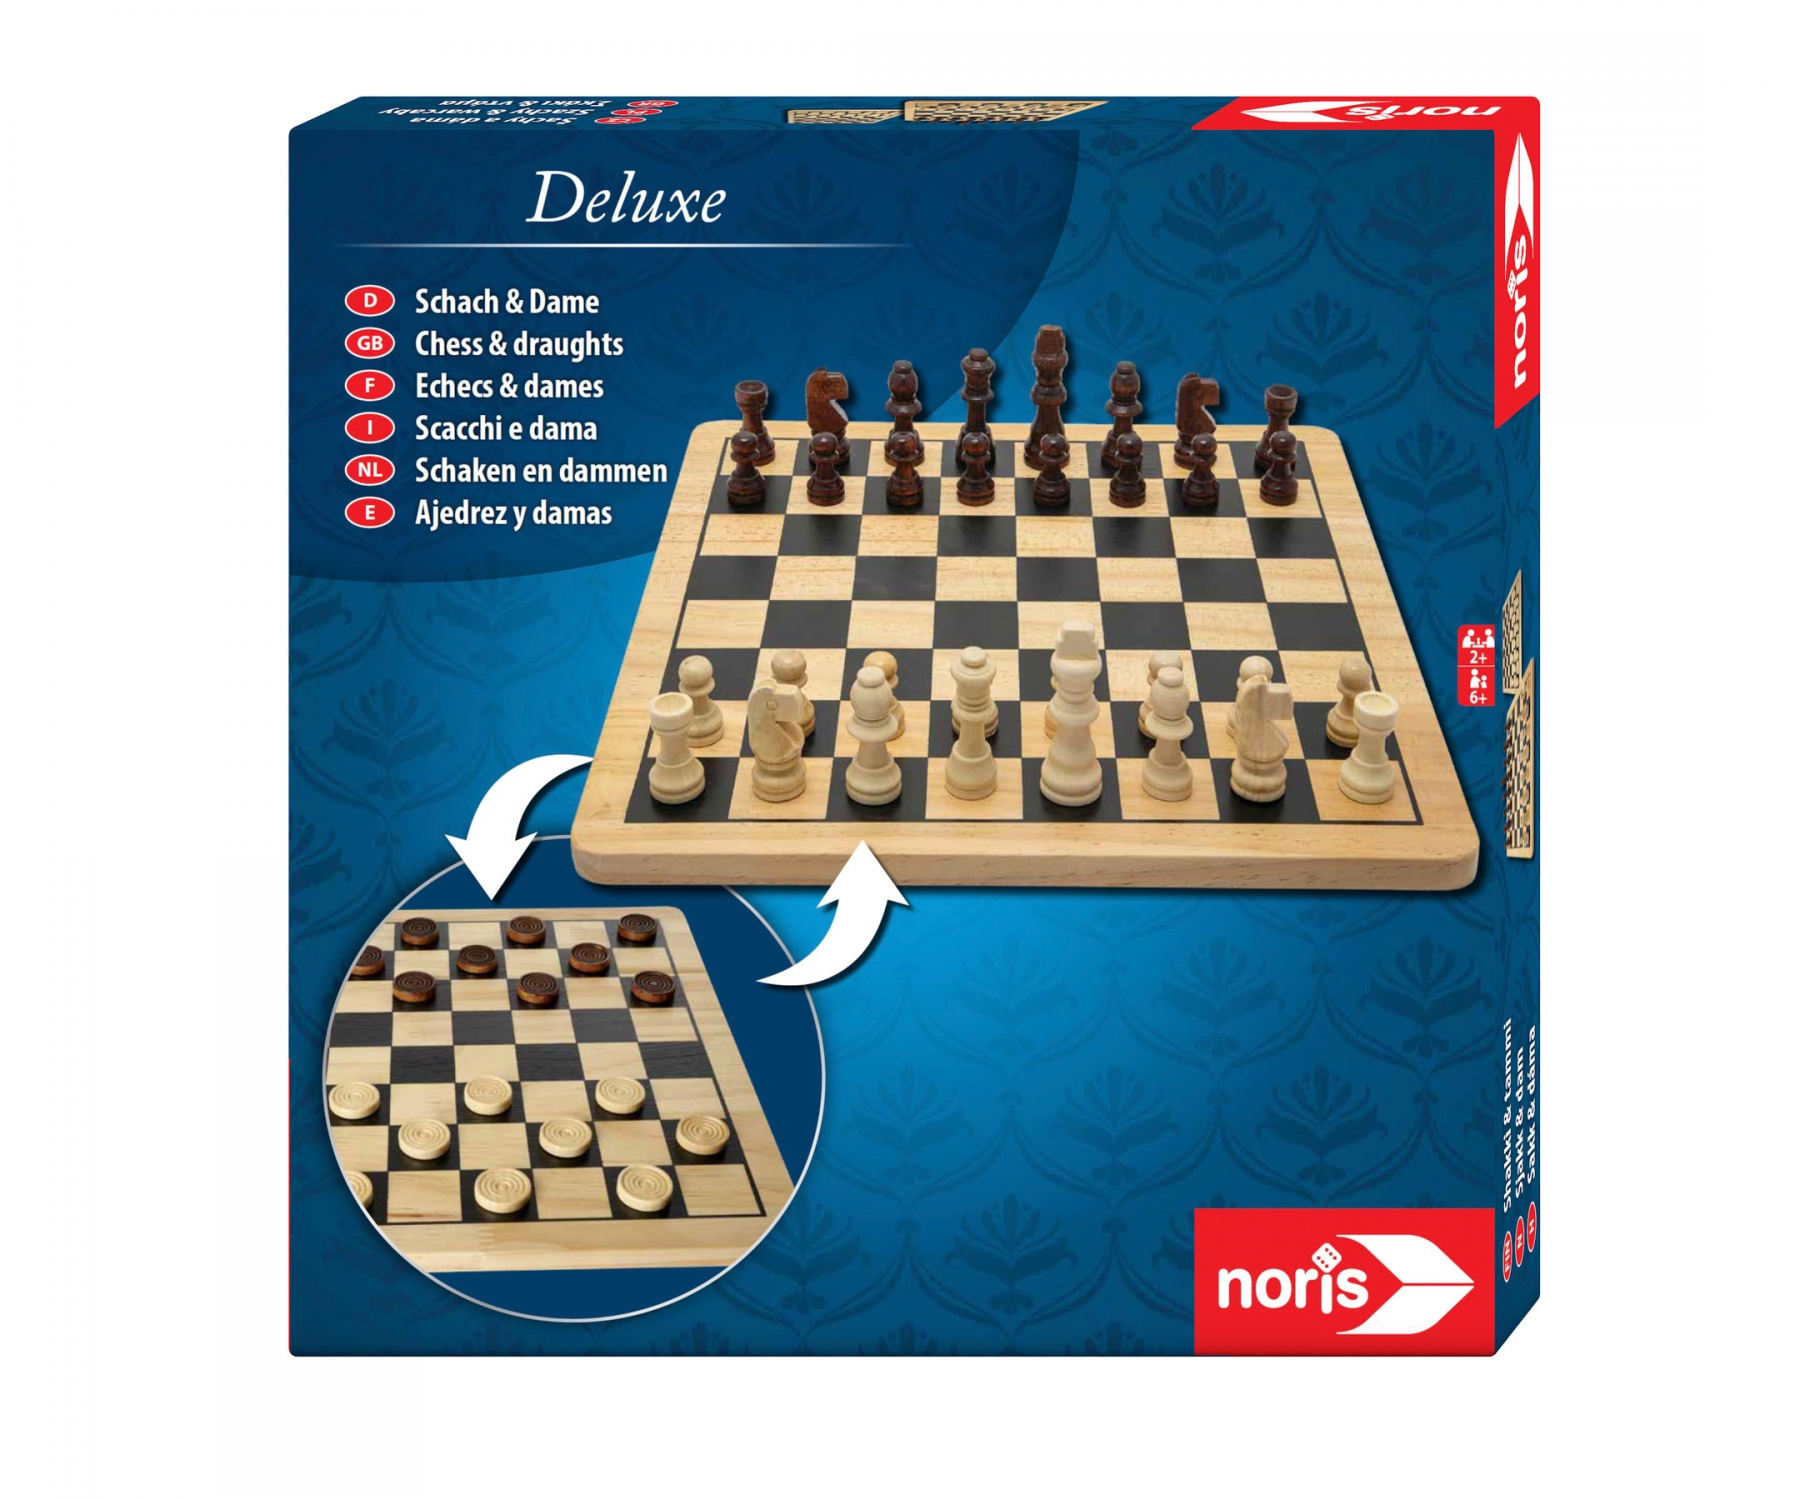 Deluxe Schach and Dame Brettspiel-Kontor